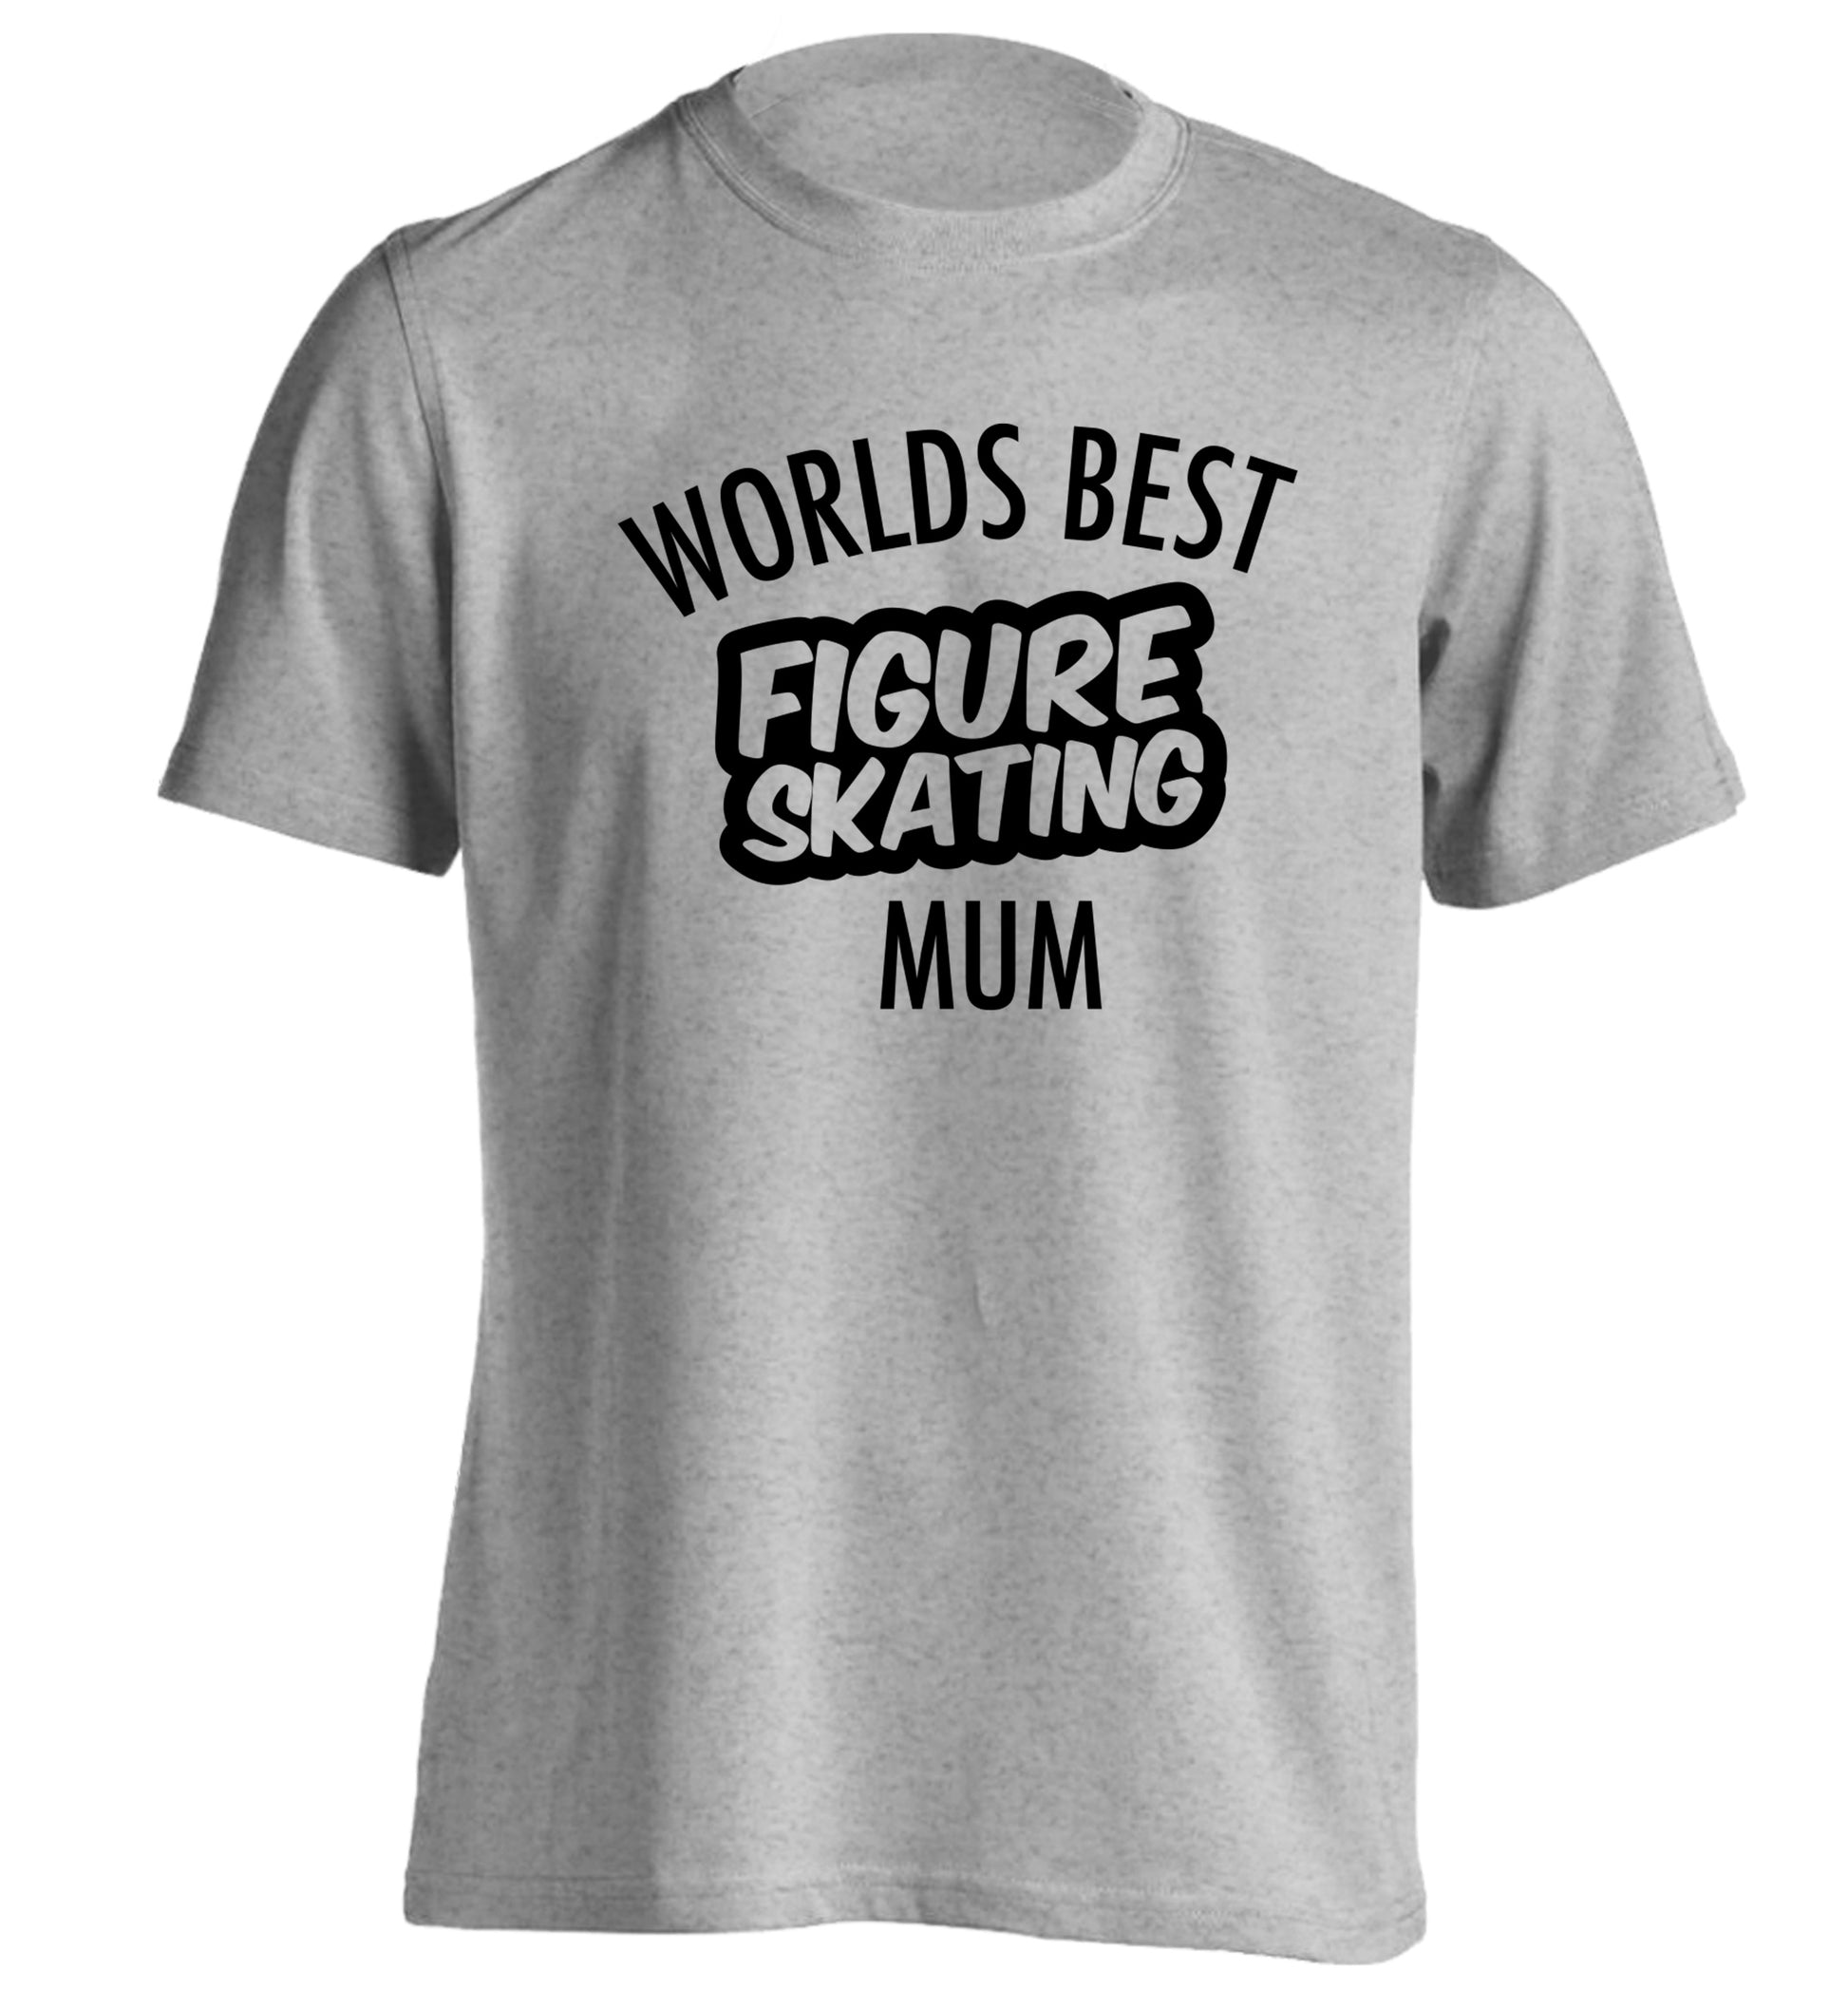 Worlds best figure skating mum adults unisexgrey Tshirt 2XL